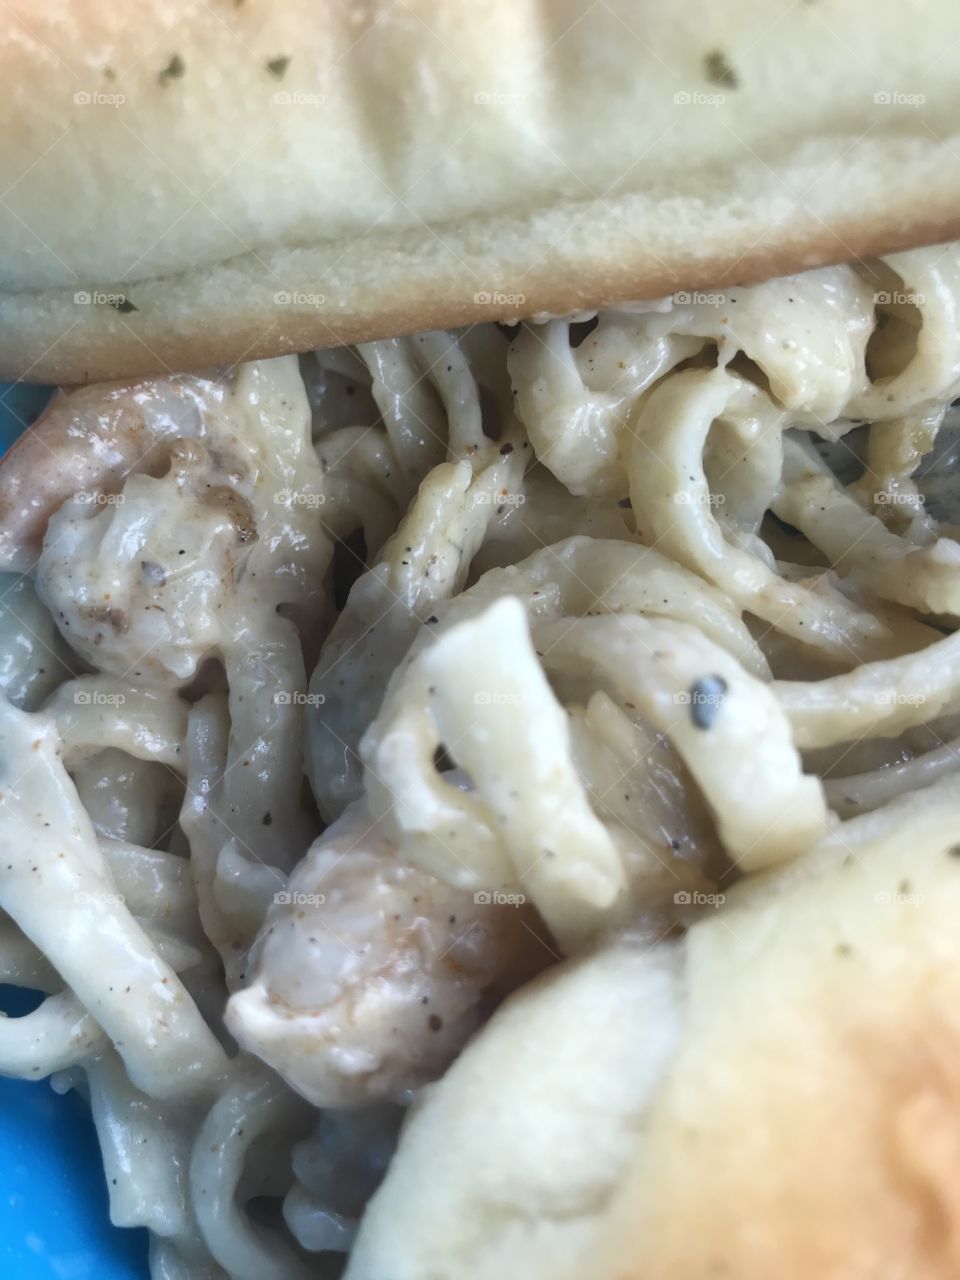 Shrimp pasta and garlic bread 🤤